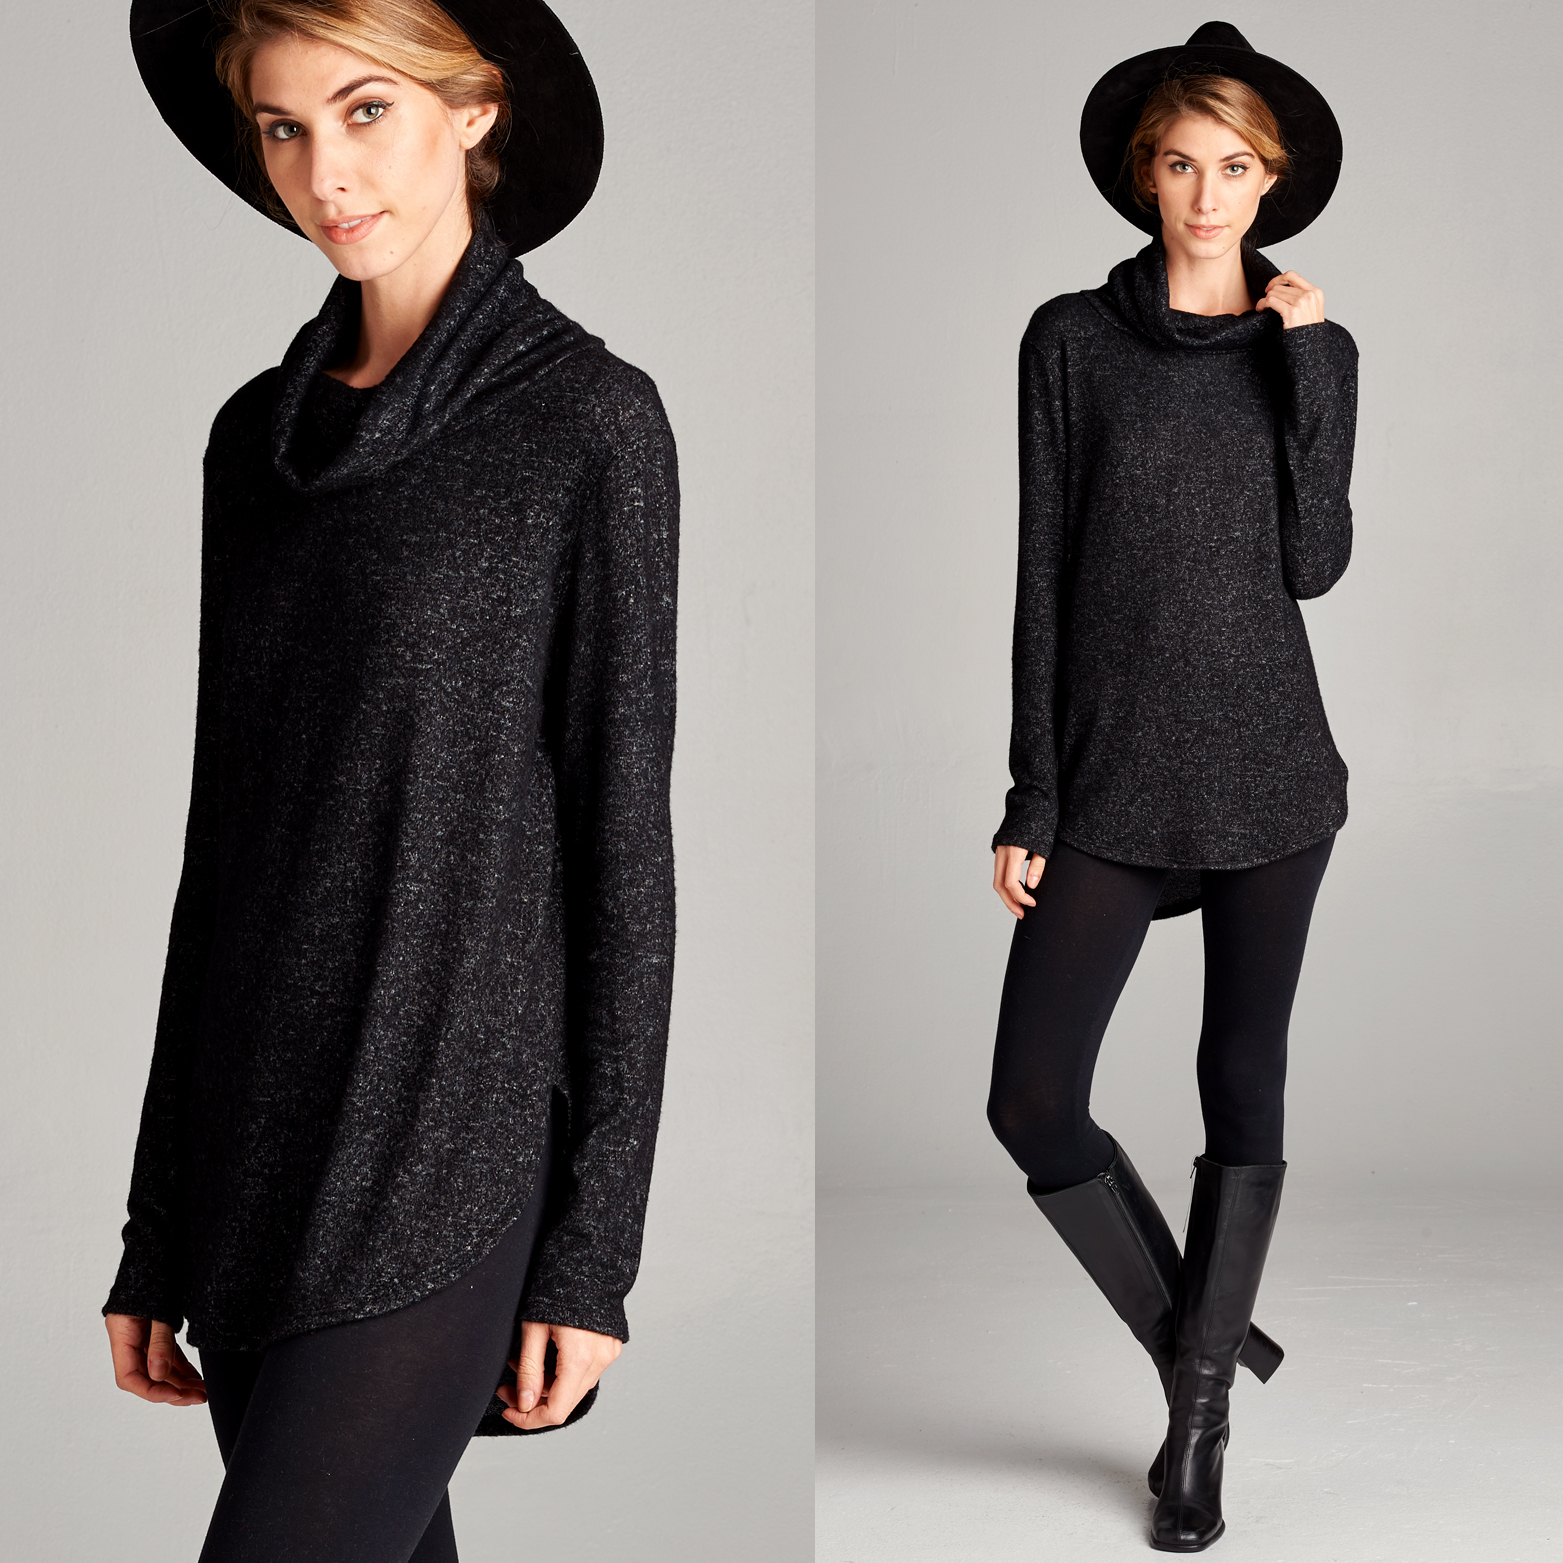 Long Sleeve Brushed Hacci Sweater - Black, Medium (8-10)